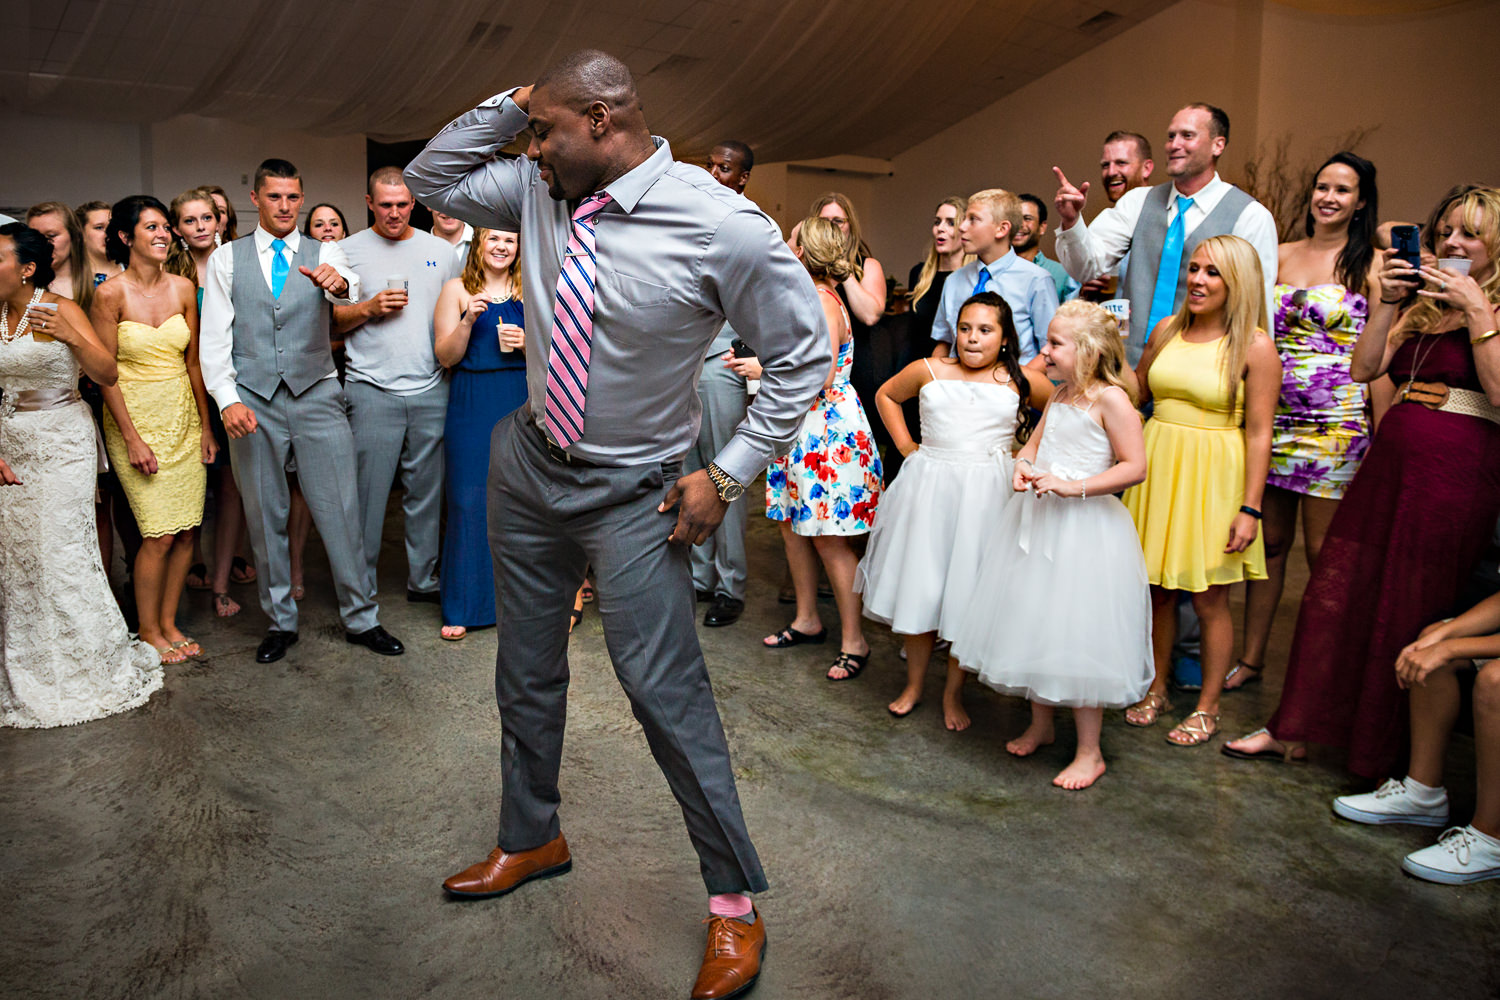 billings-montana-chanceys-wedding-reception-guest-dance-off.jpg